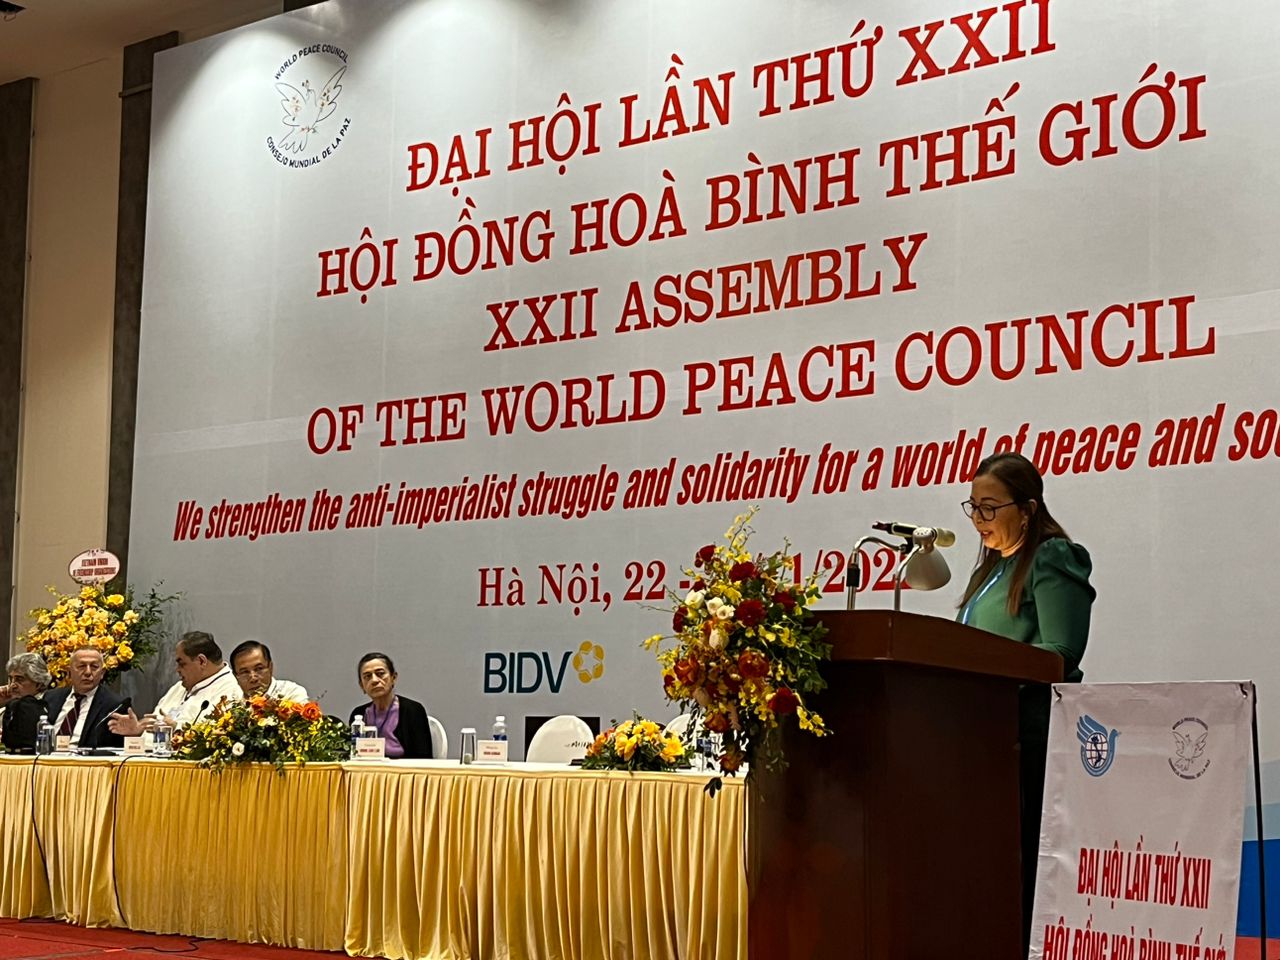 ISB presente en la XXII Asamblea del Consejo Mundial de la Paz en Vietnam